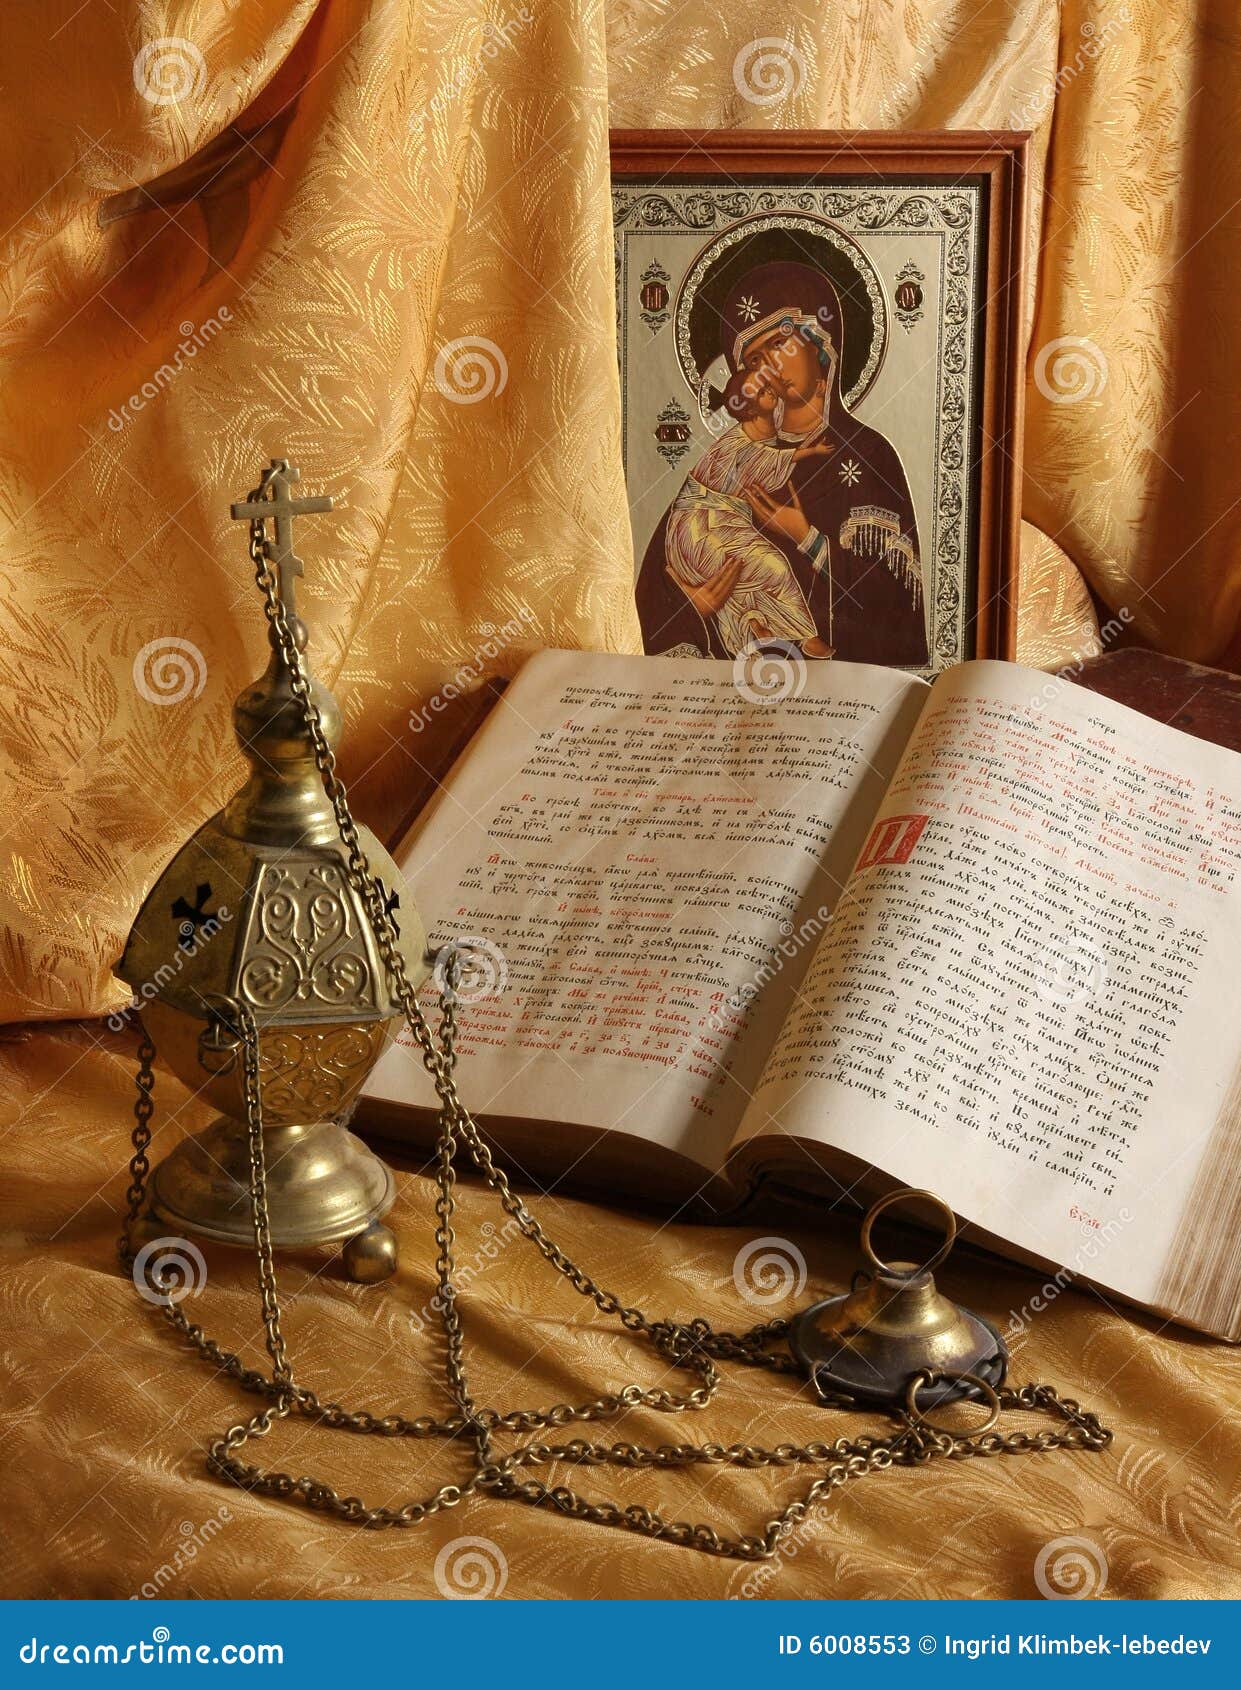 orthodox icon, books and censer